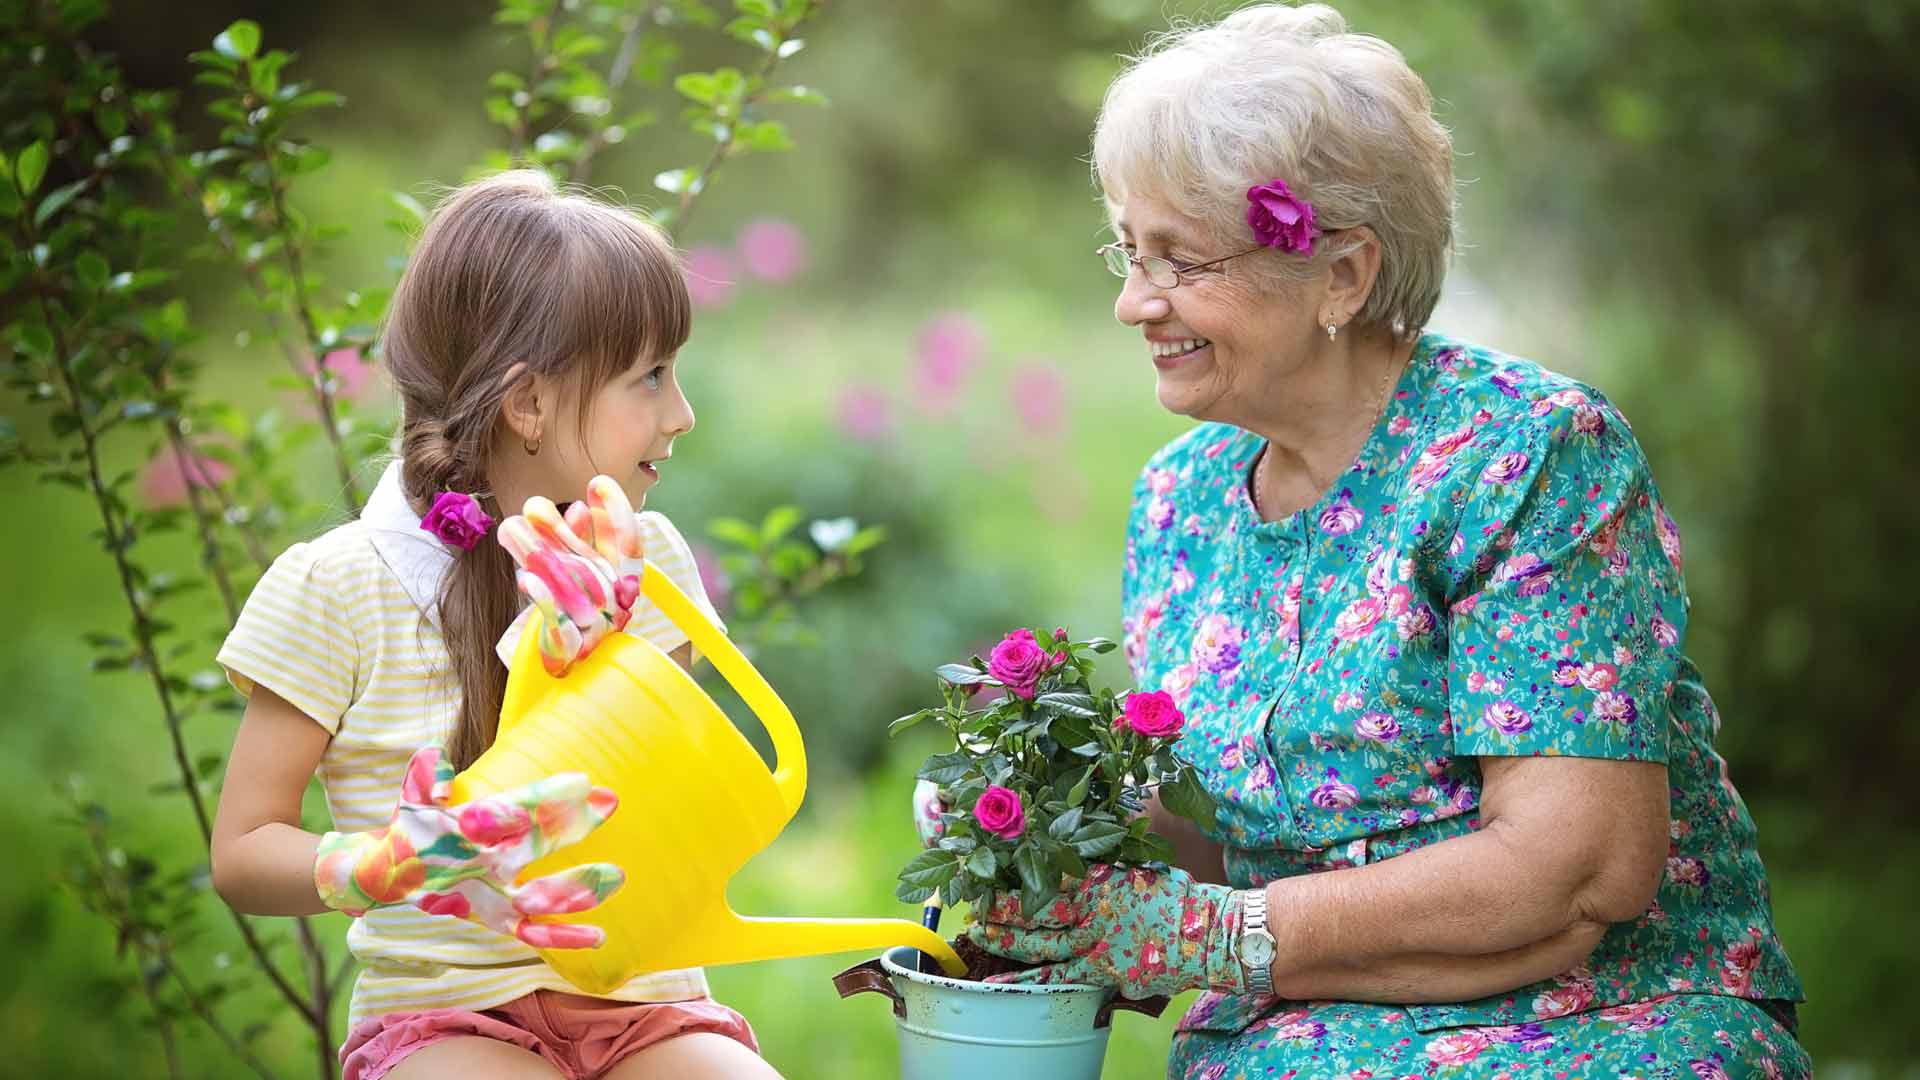 Давайте поможем бабушке. Бабушка и внучка. Бабушка и внучка в саду. Помогать бабушке в саду. Бабушка с внучкой в цветах.